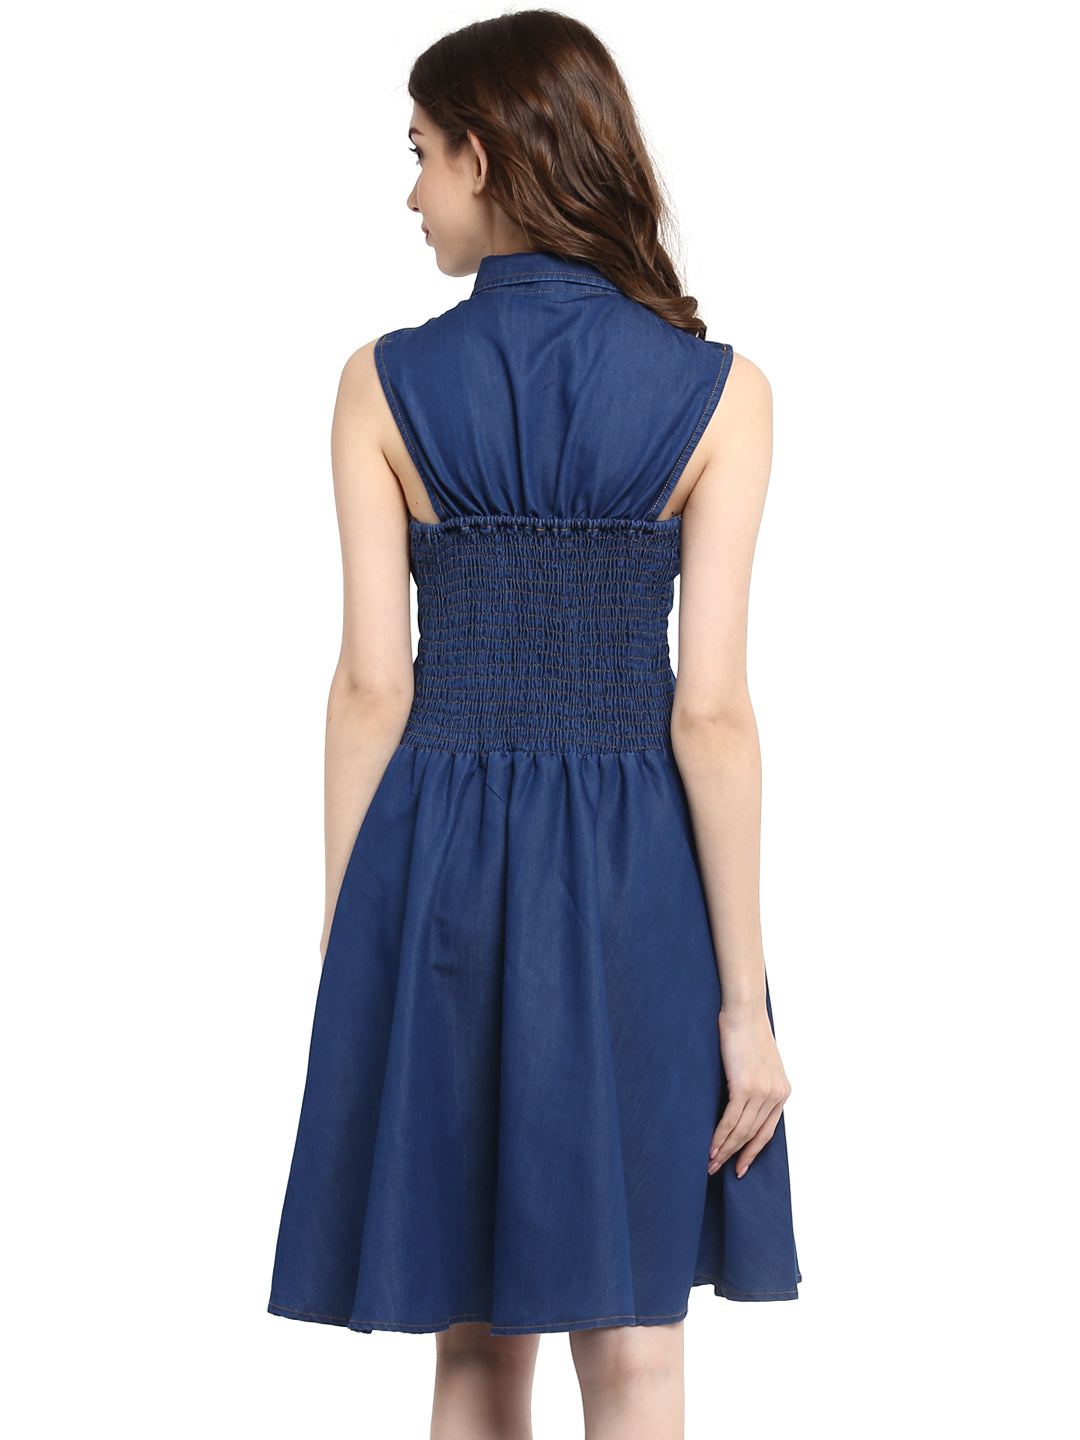 Women's  Dark Blue Denim Dress with Neck cutout - StyleStone